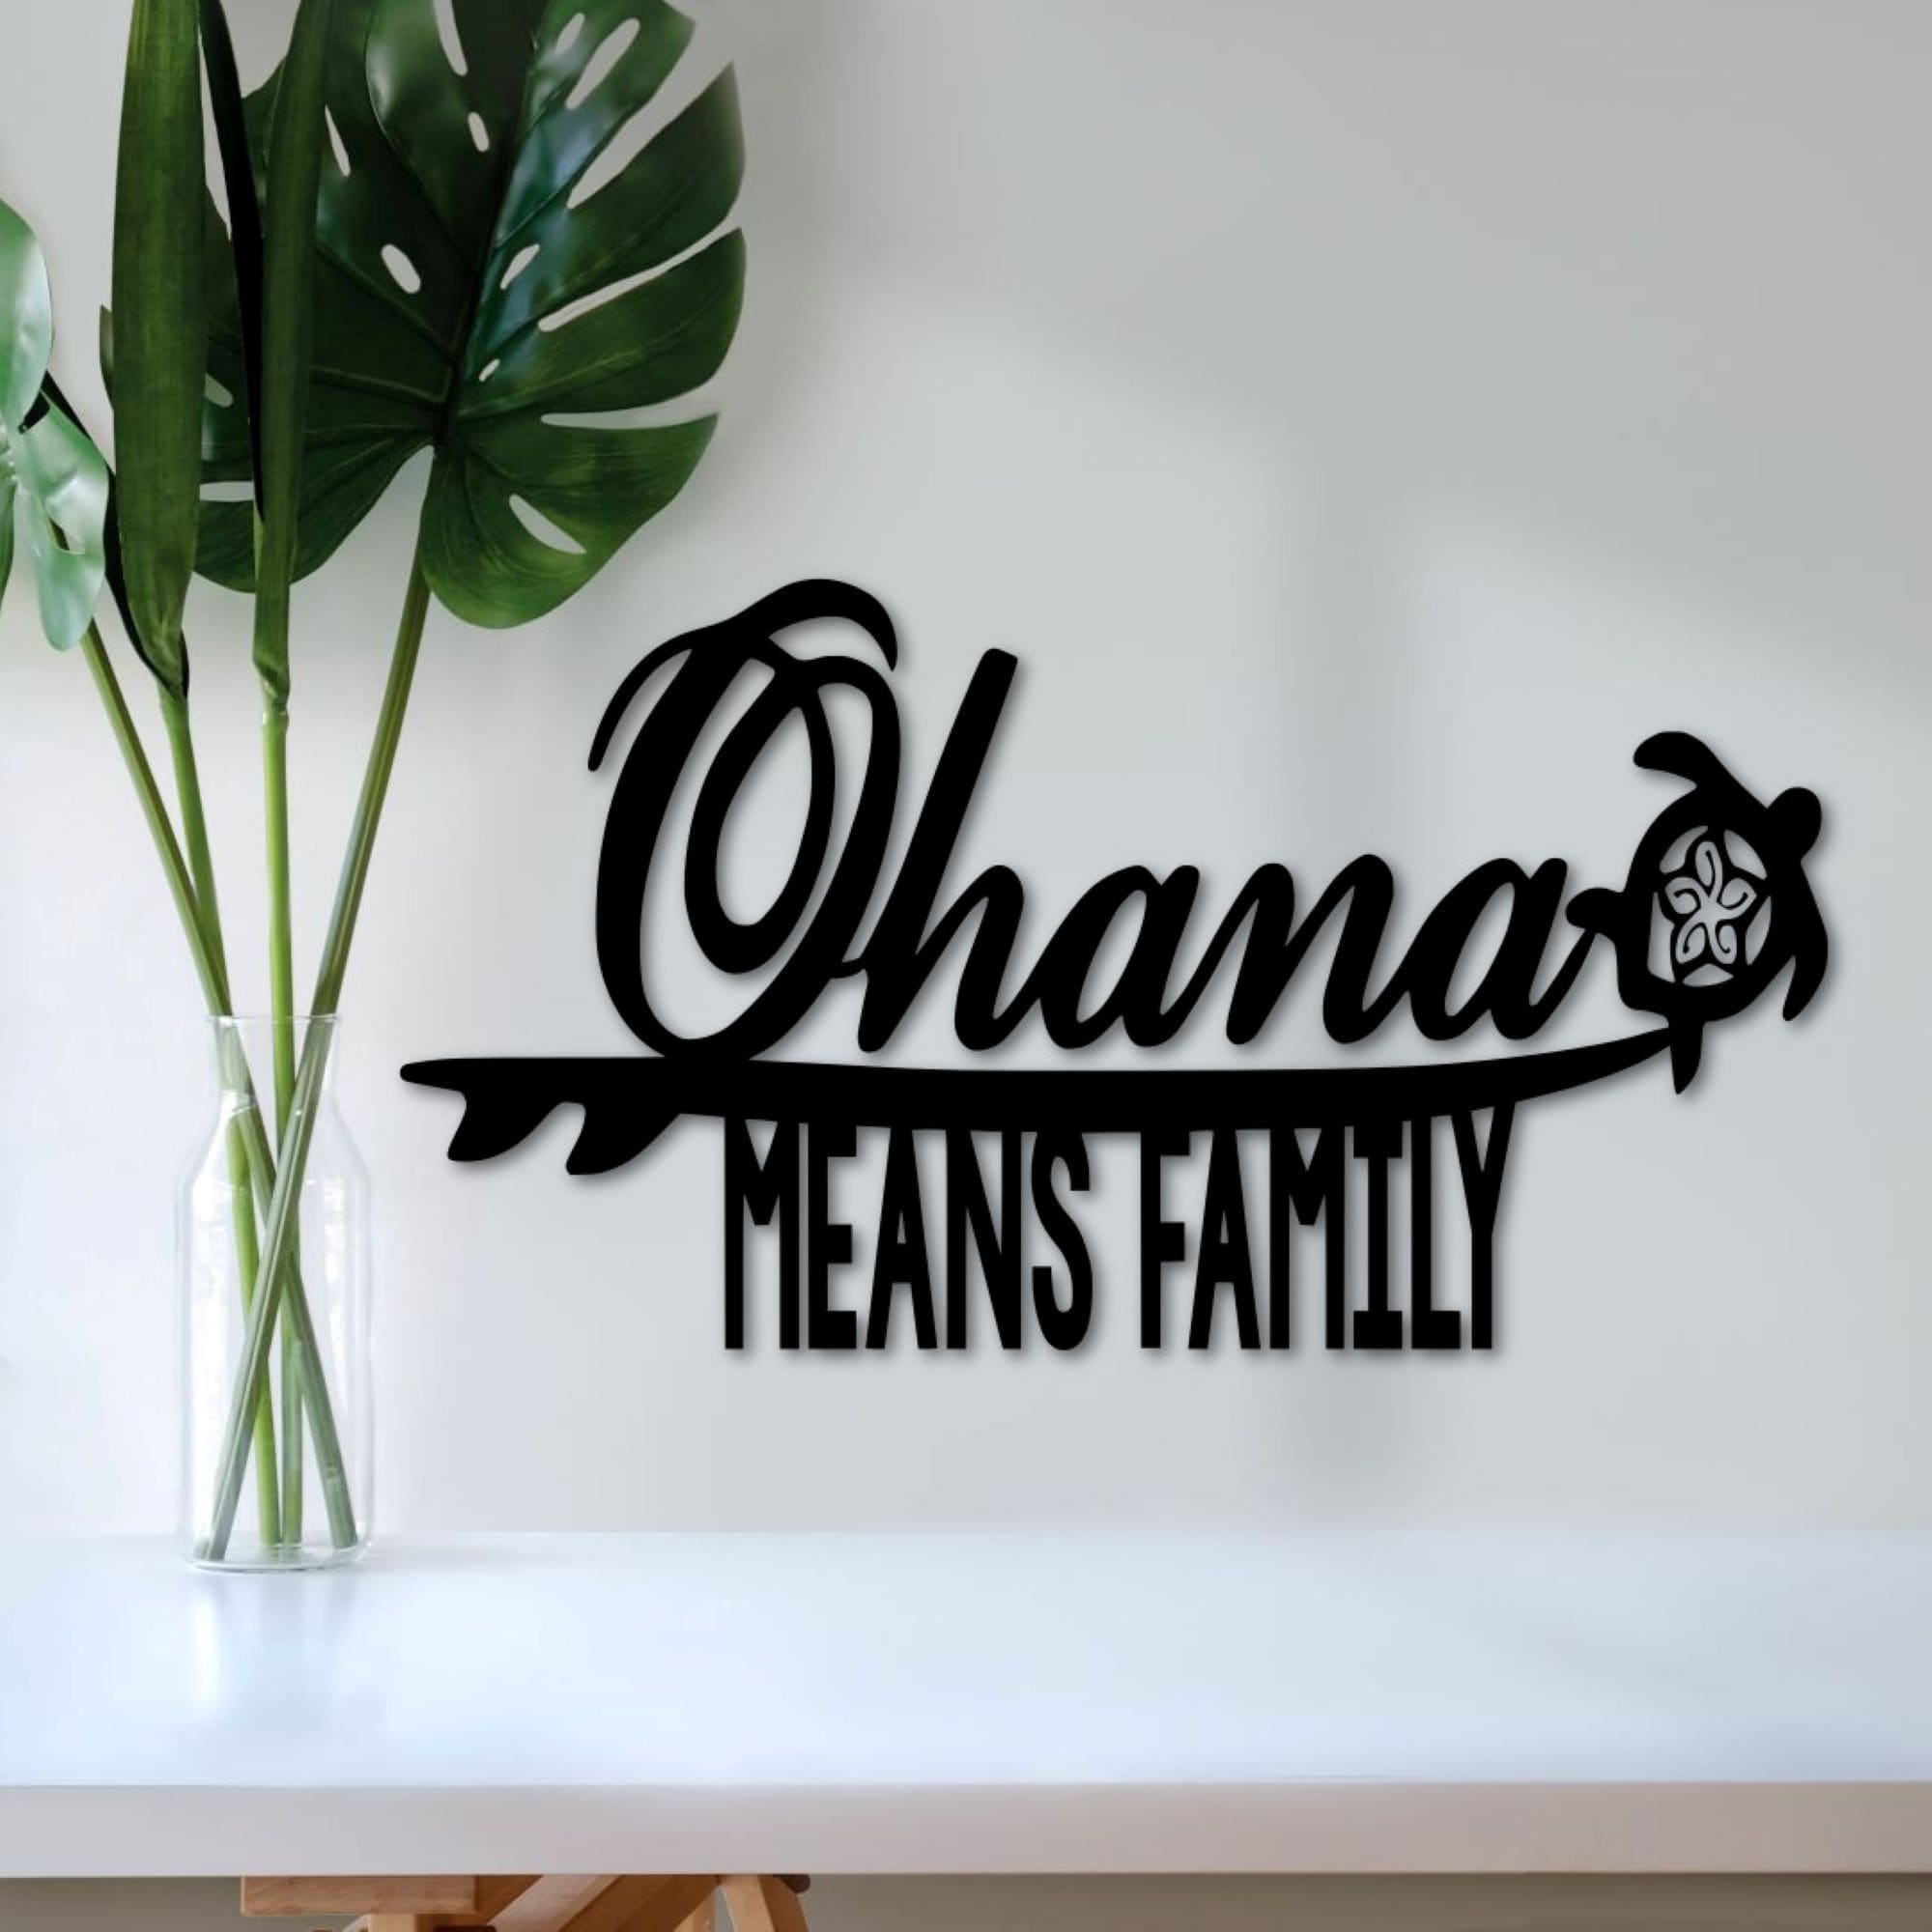 Metal Ohana Sign, Wall Decor, Ohana Means Family Hawaiian Decor, Hawaii Saying, Hawaiian Art, Metal Word Art, Family Sign From Hawaii